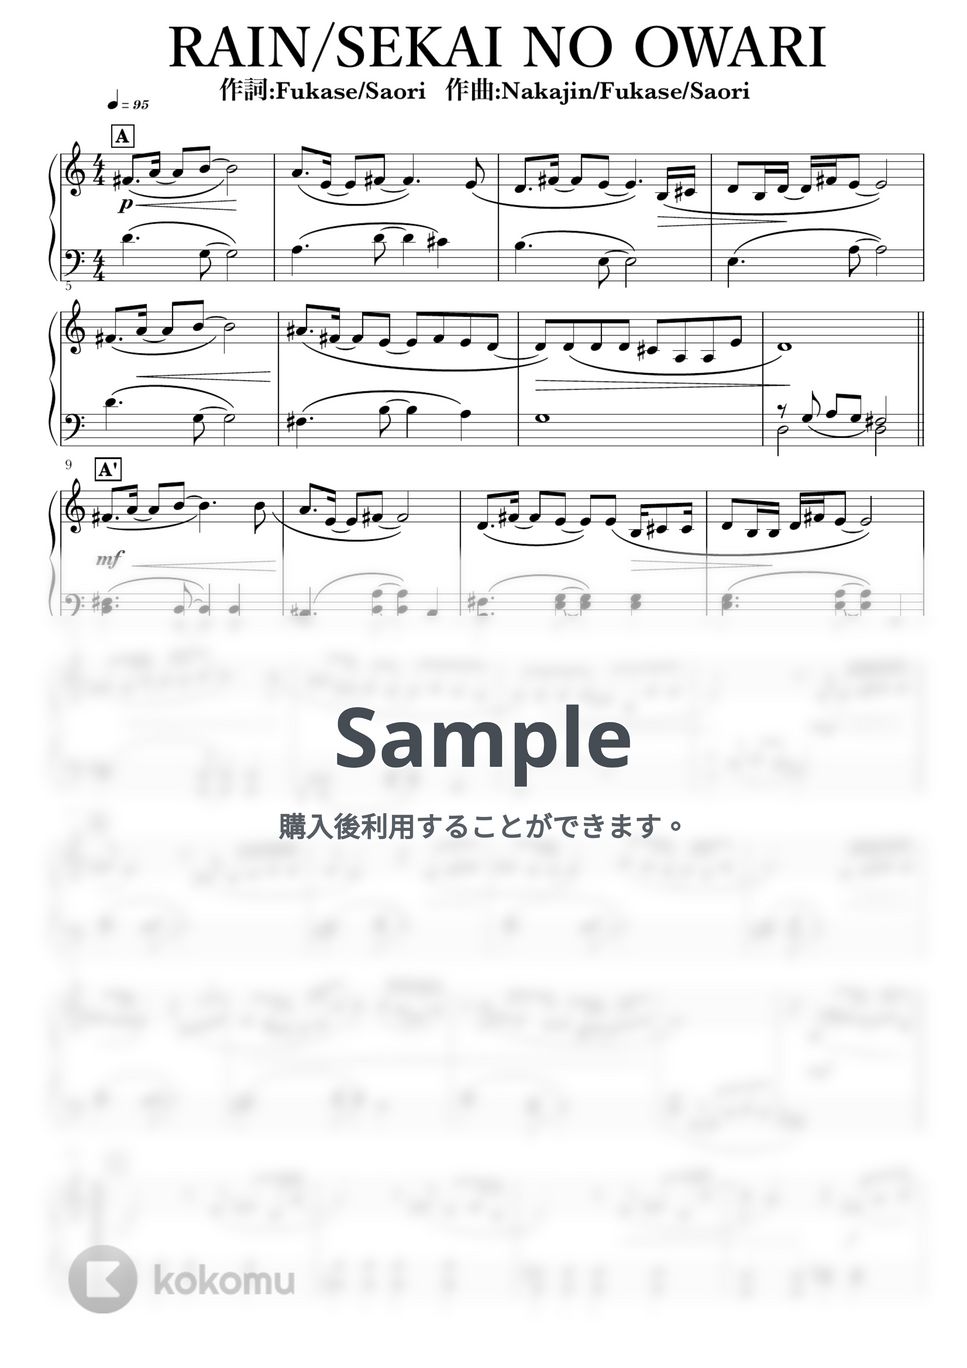 SEKAI NO OWARI - RAIN by NOTES music